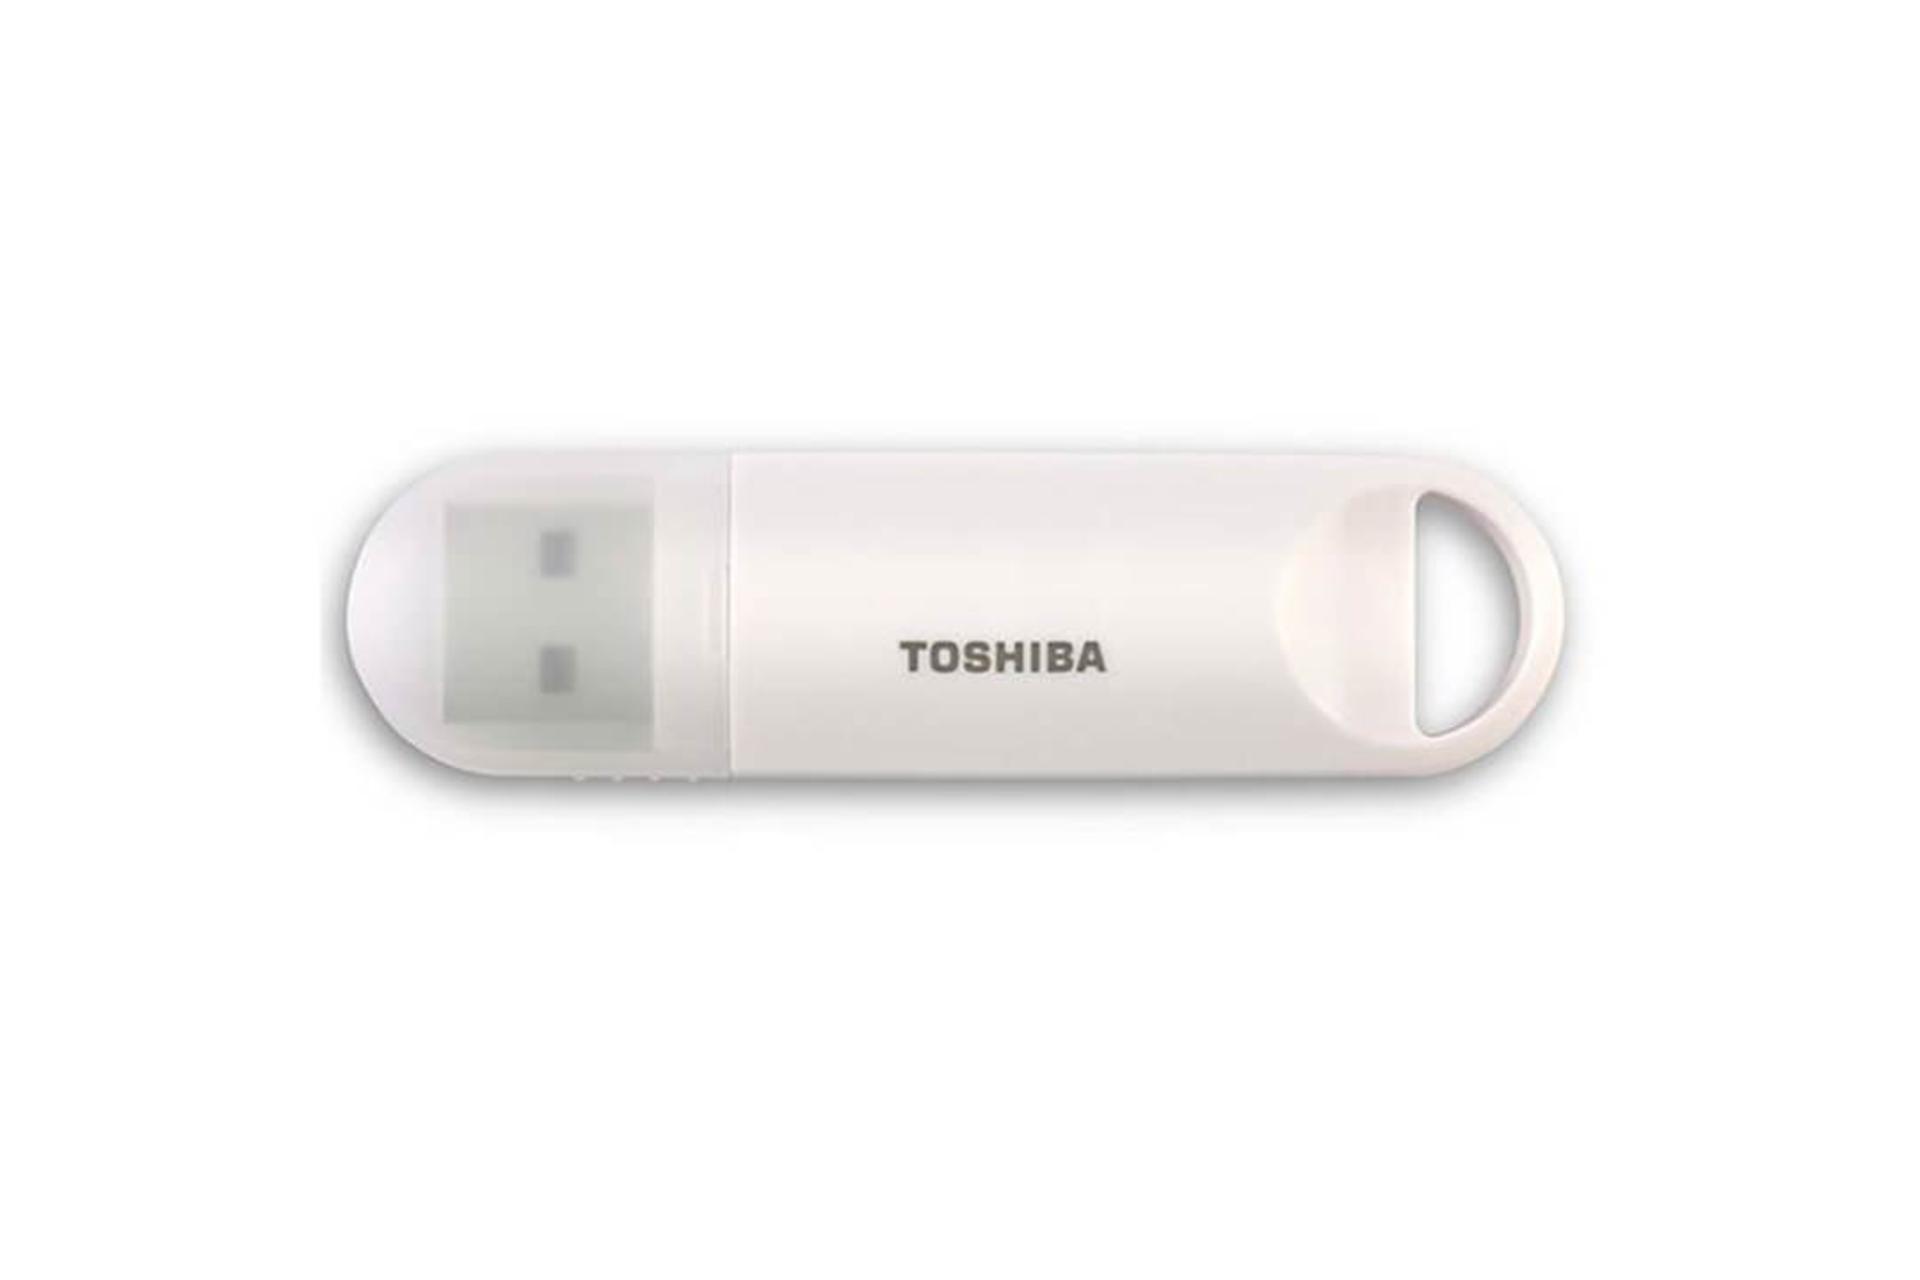 Toshiba Suzako 8GB